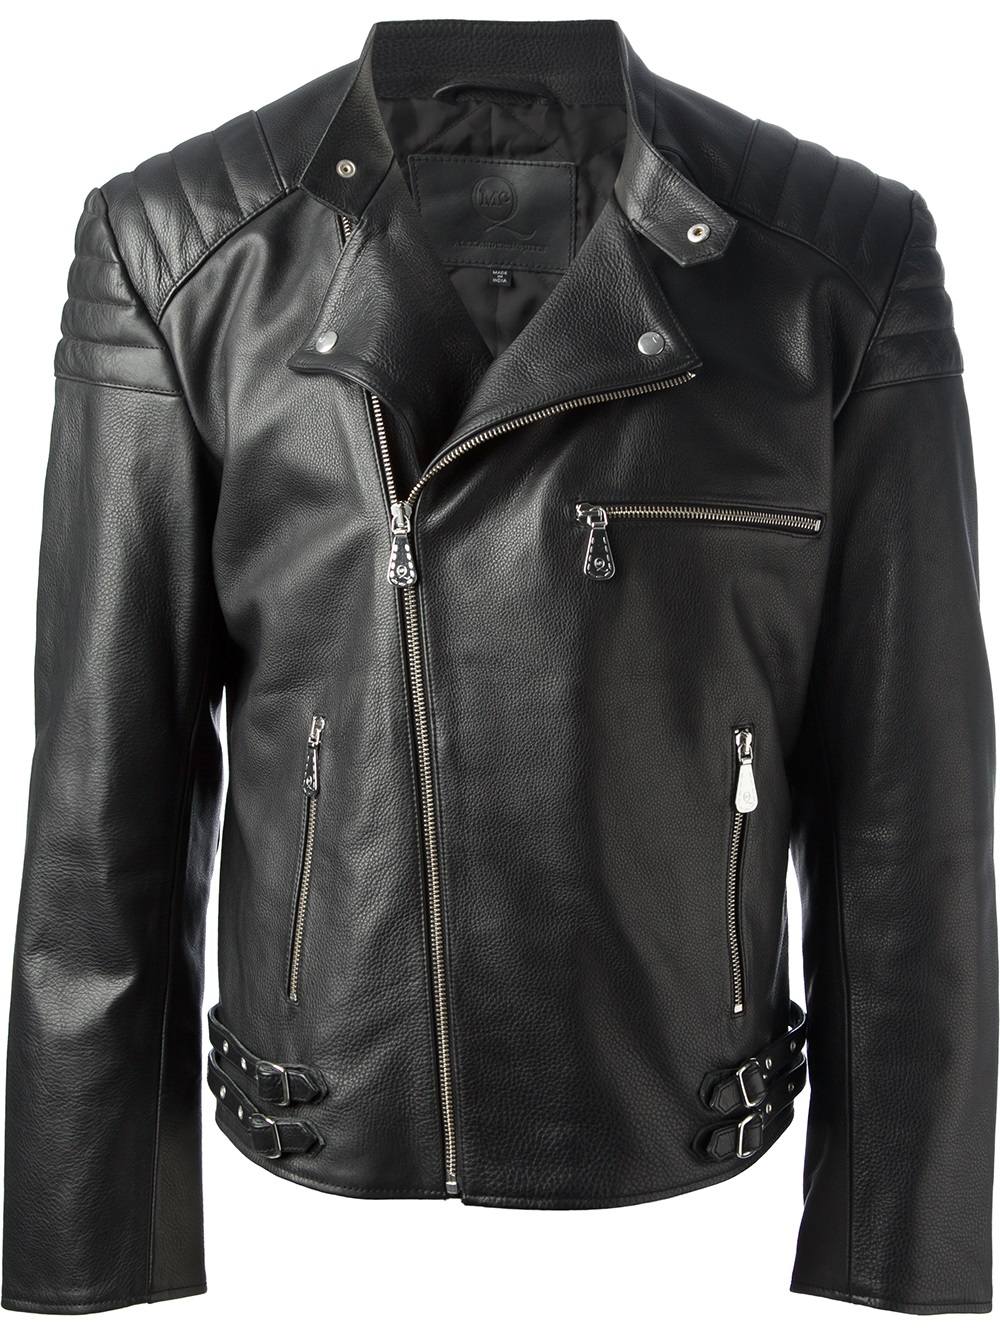 Lyst - Mcq Leather Biker Jacket in Black for Men